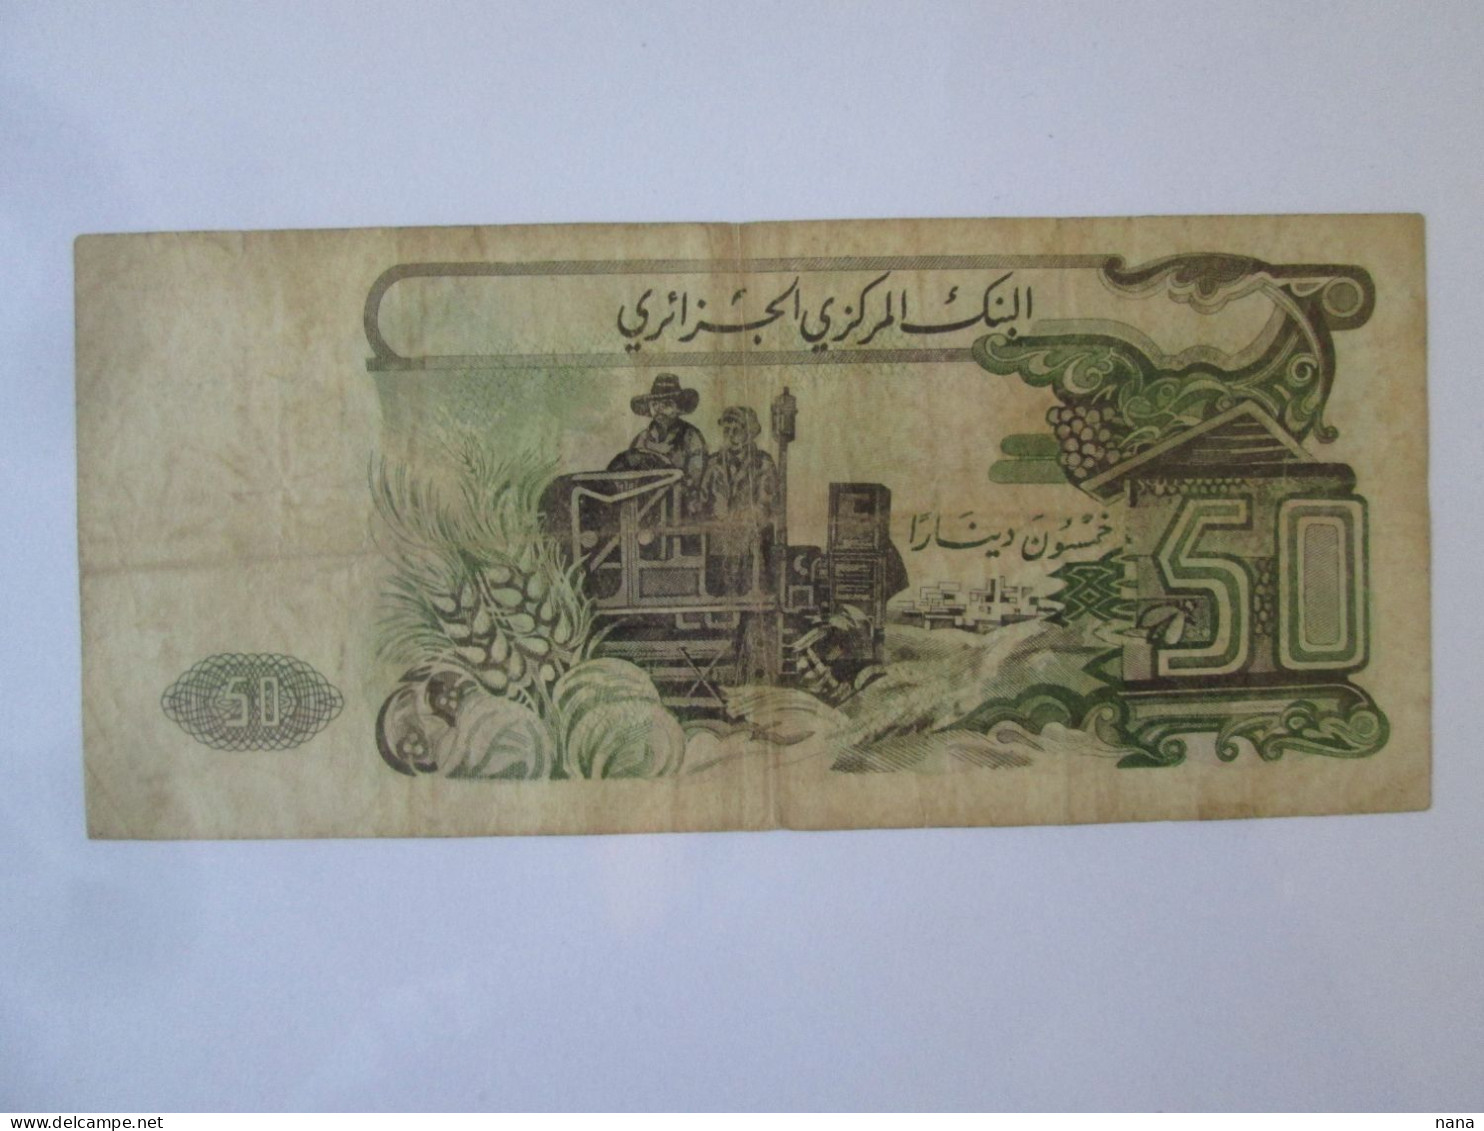 Algeria 50 Dinars 1977 Banknote,see Pictures - Algérie